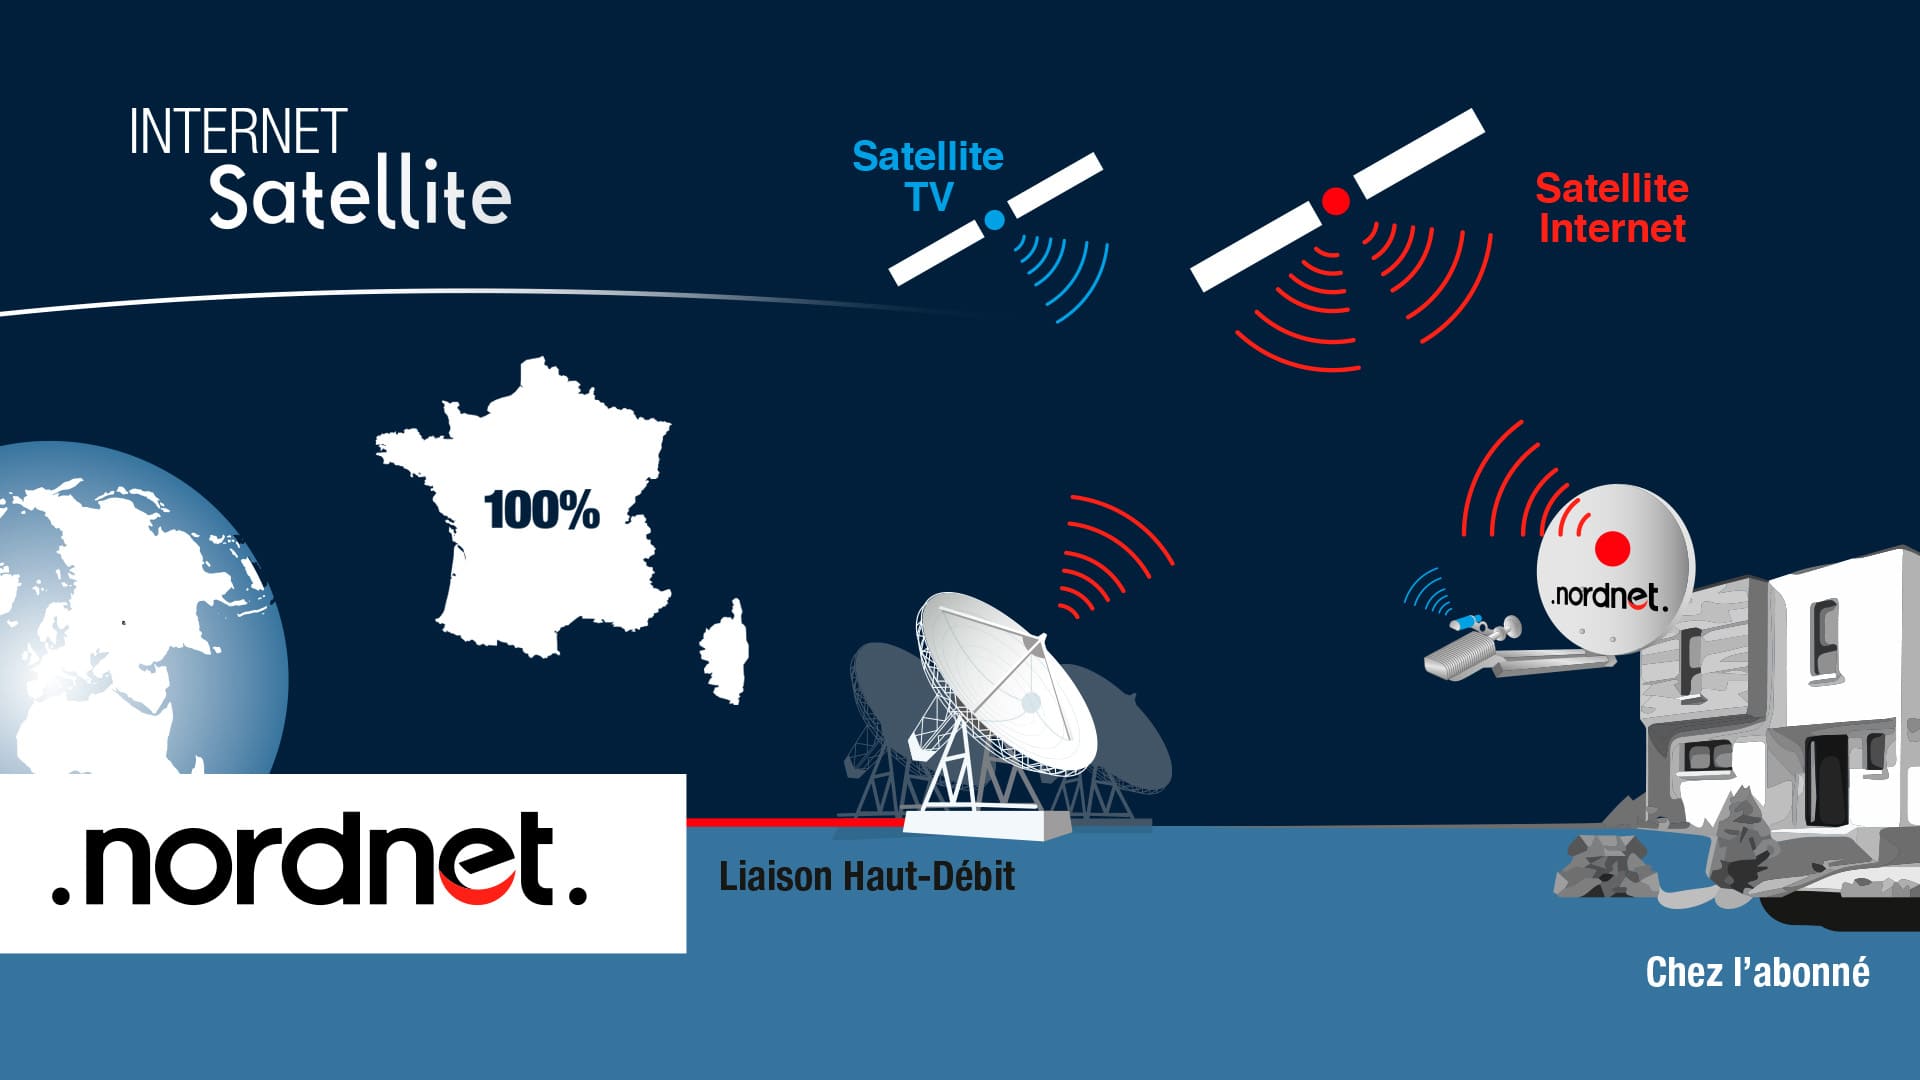 internet satellite nordnet